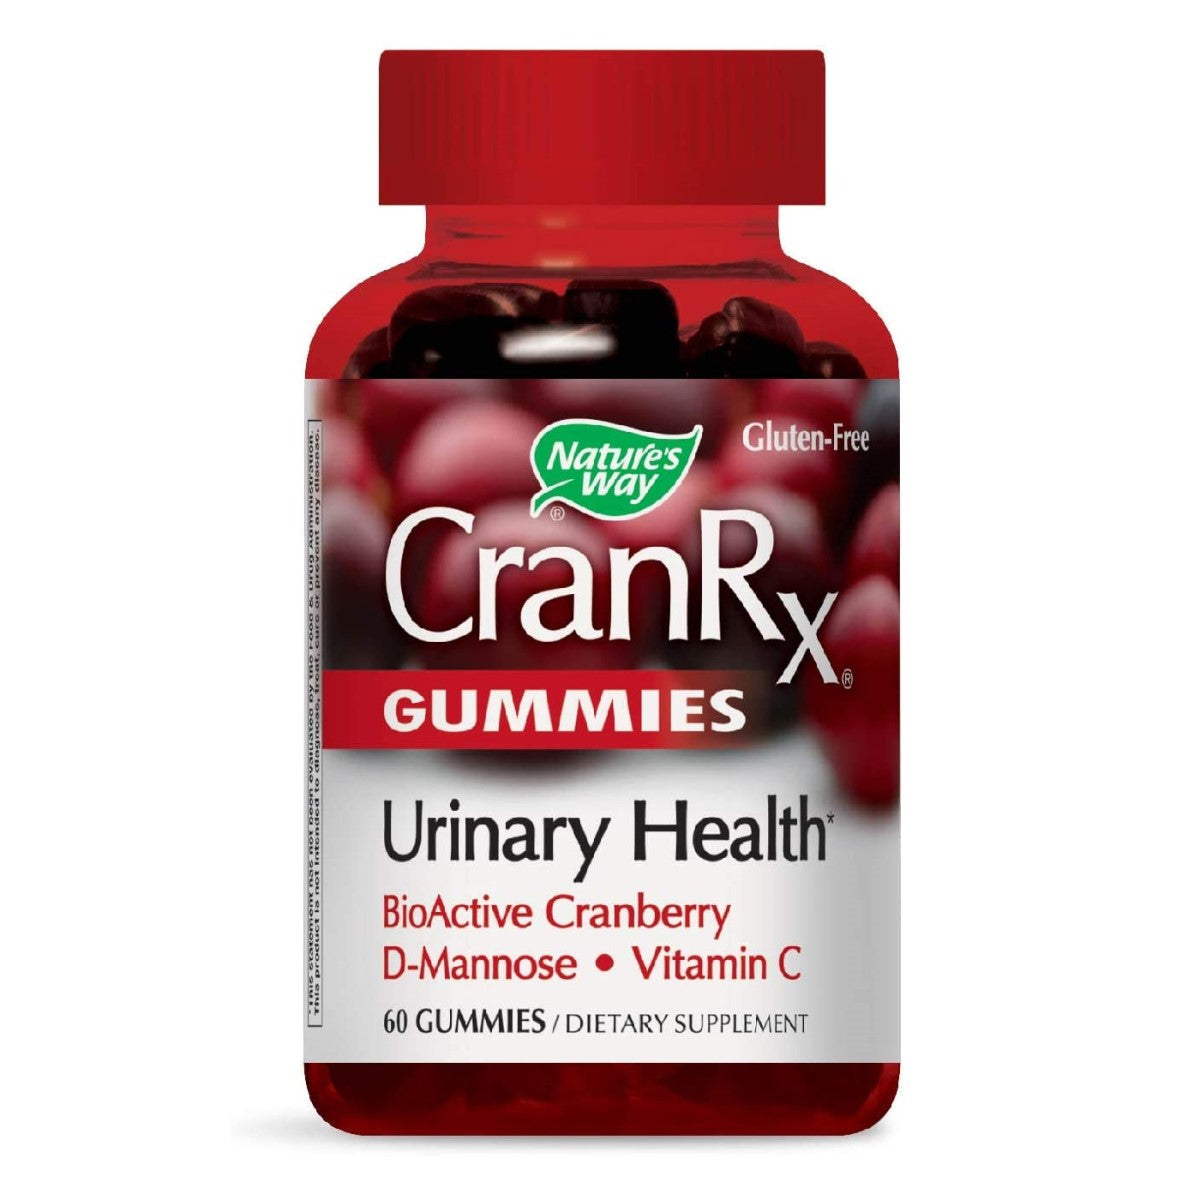 Primary image of CranRx Gummies